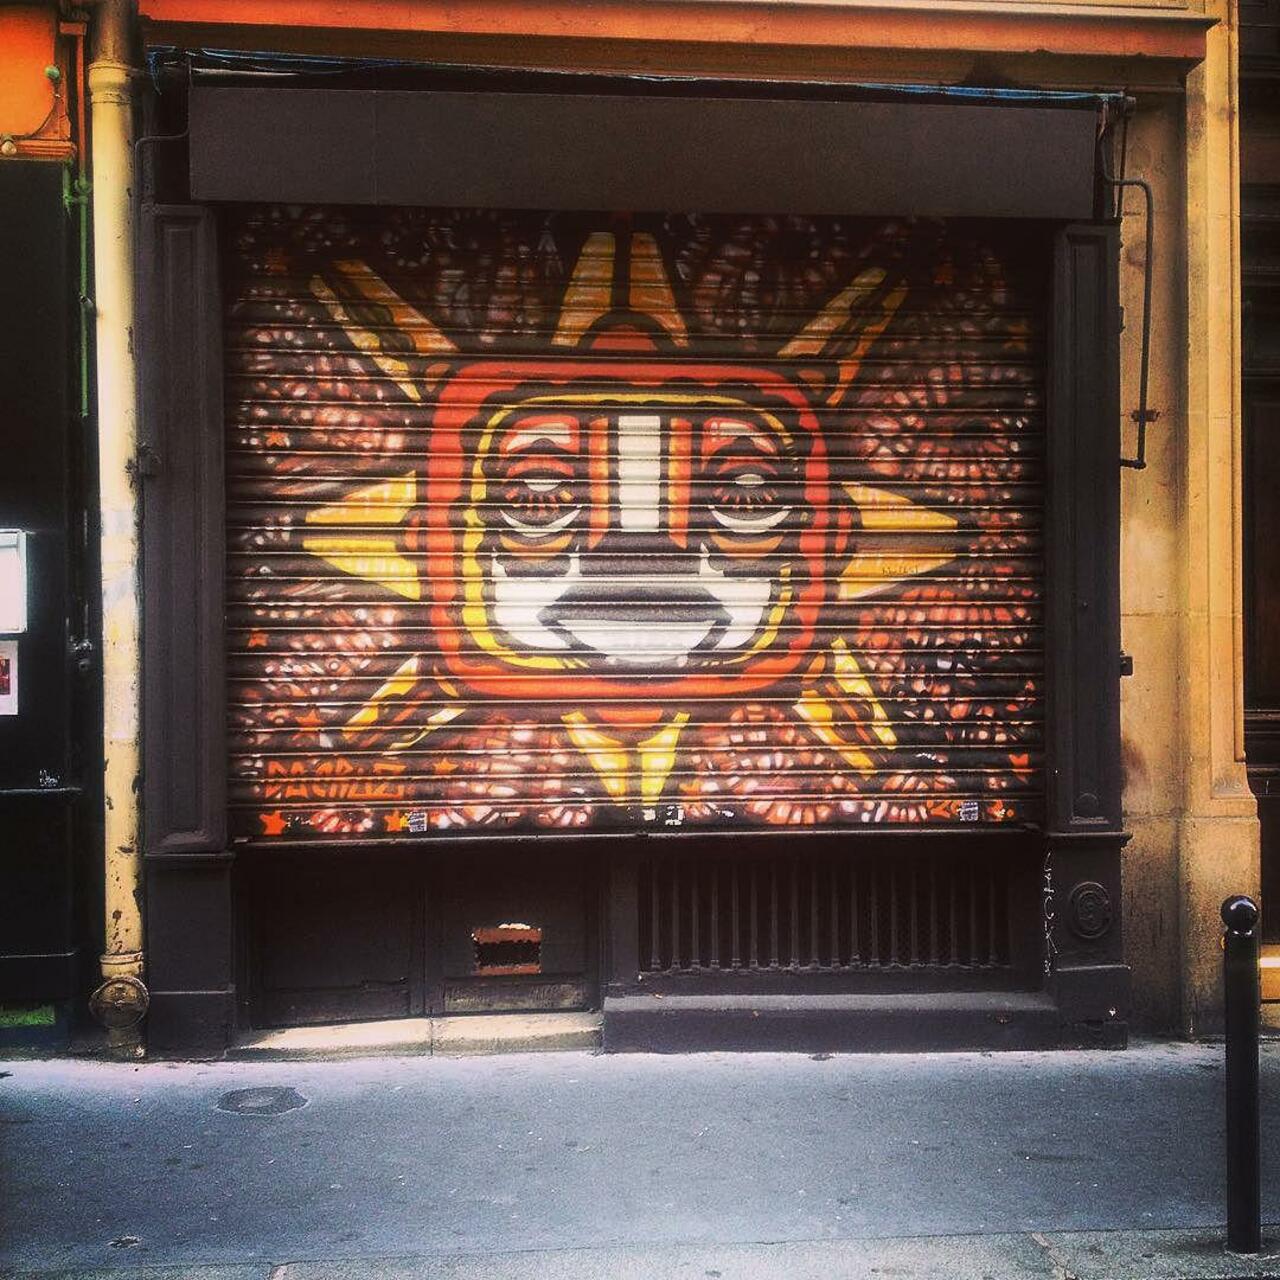 circumjacent_fr: #Paris #graffiti photo by mh2p_ http://ift.tt/1jrO8Vl #StreetArt http://t.co/s3WegKlTky